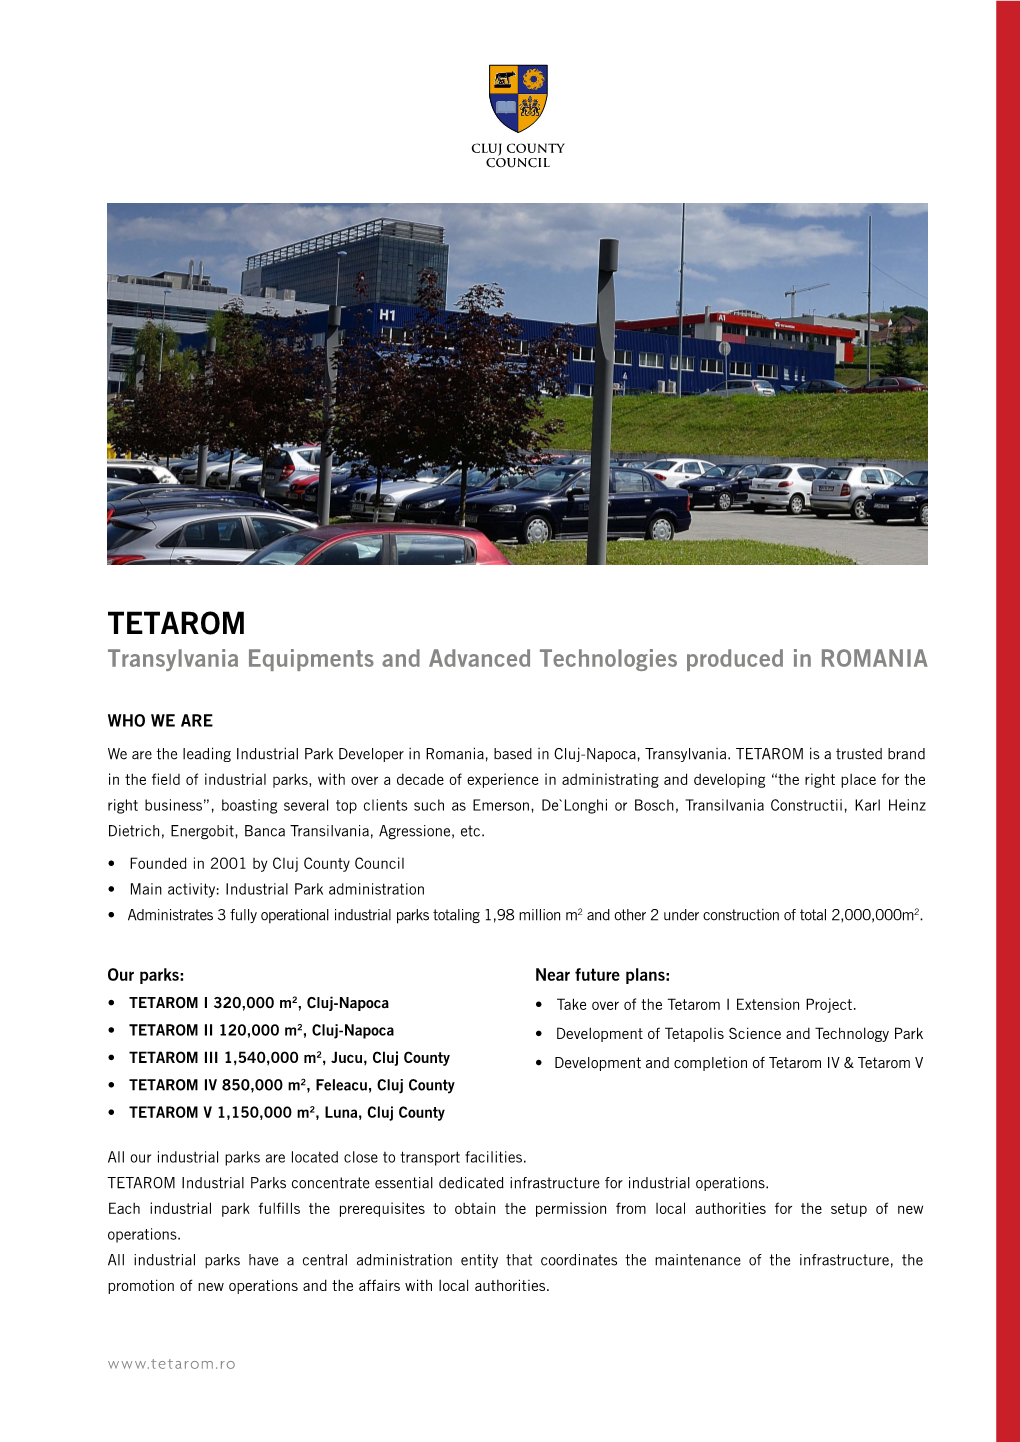 TETAROM Transylvania Equipments and Advanced Technologies Produced in Romania